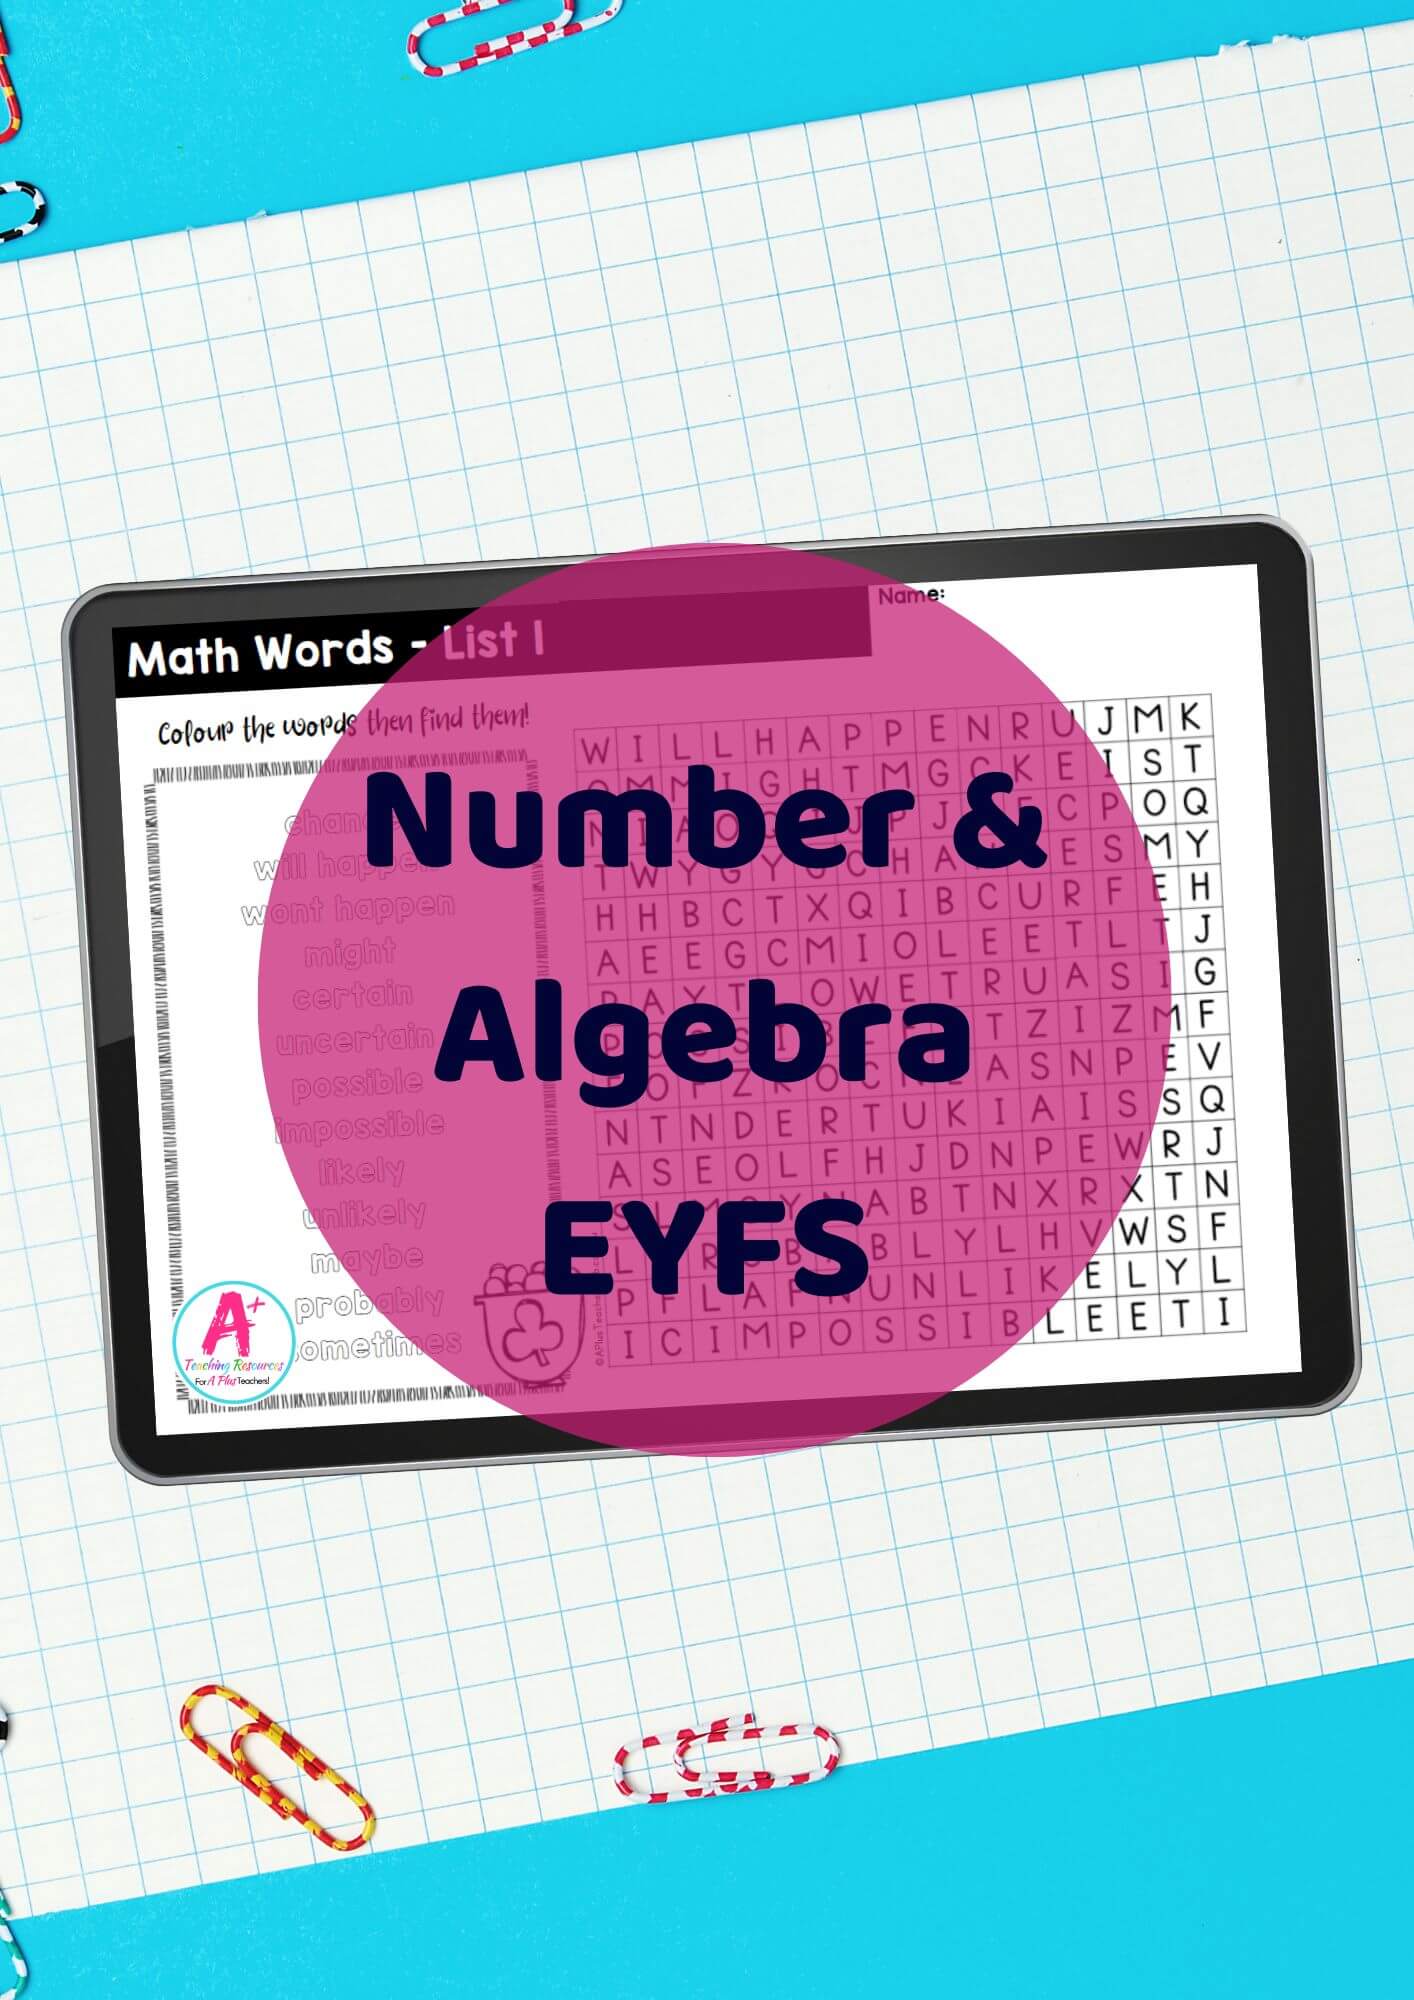 Number & Algebra Vocabulary POWERPOINT - EYFS